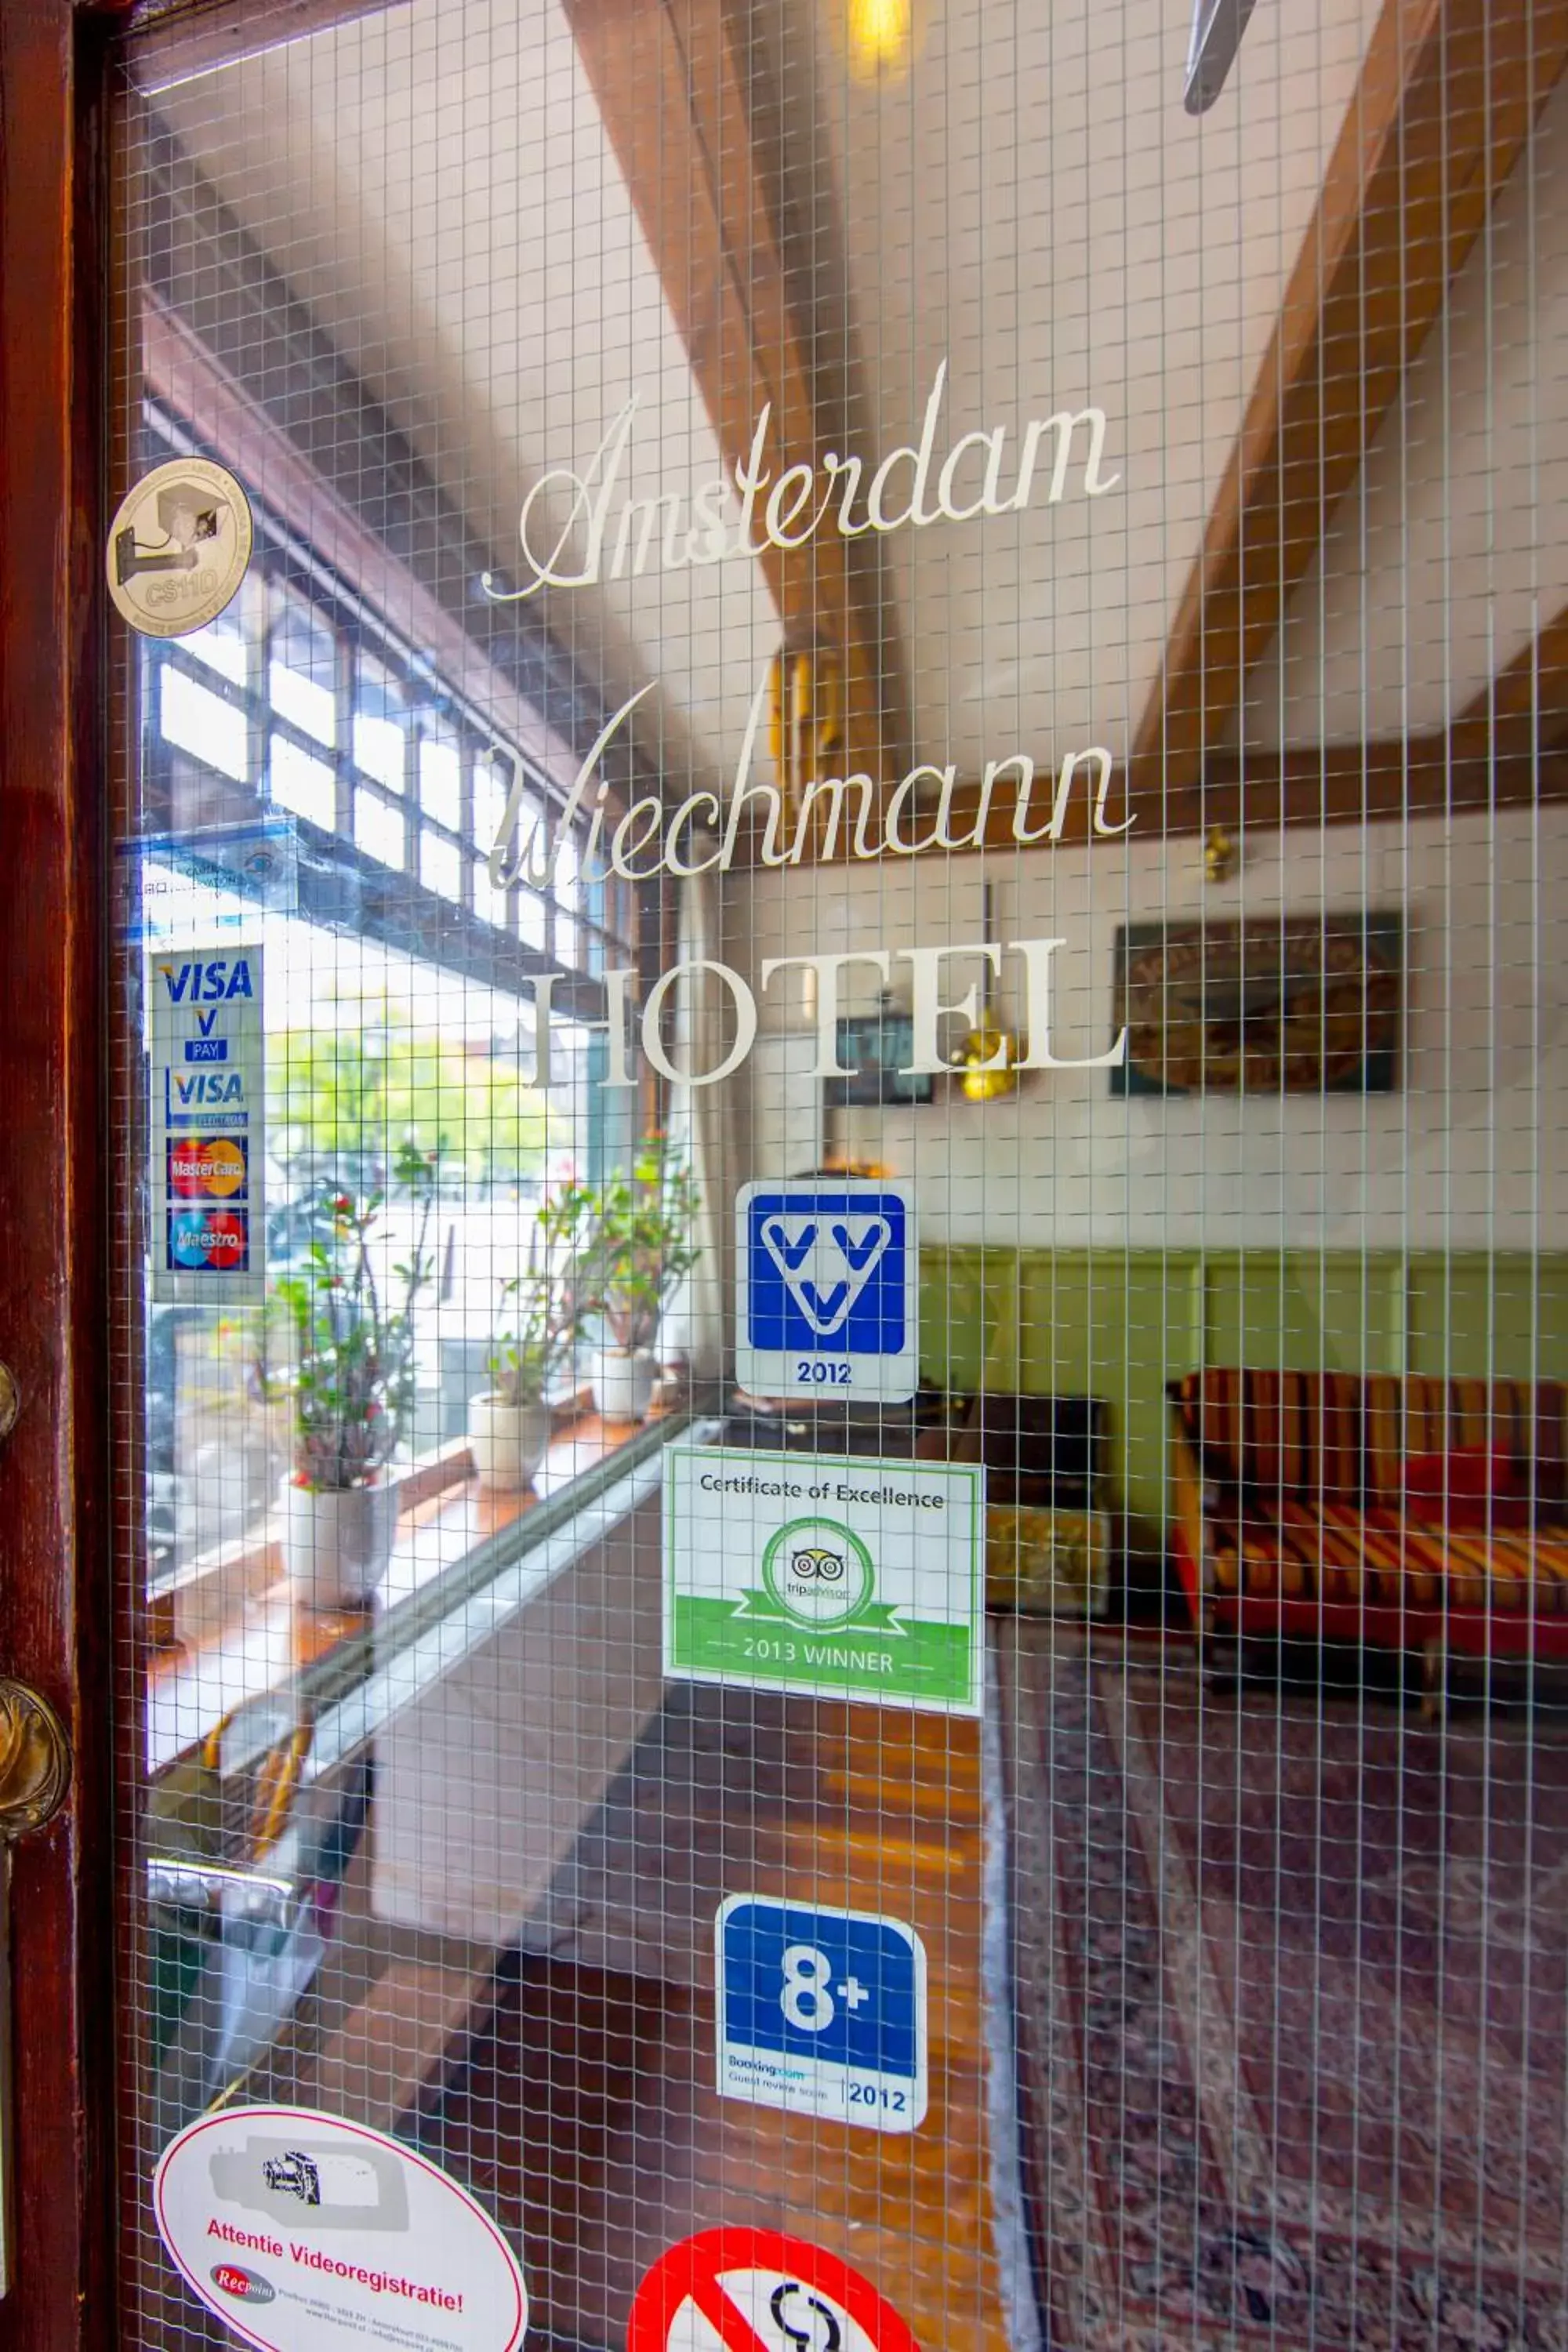 Facade/entrance in Amsterdam Wiechmann Hotel